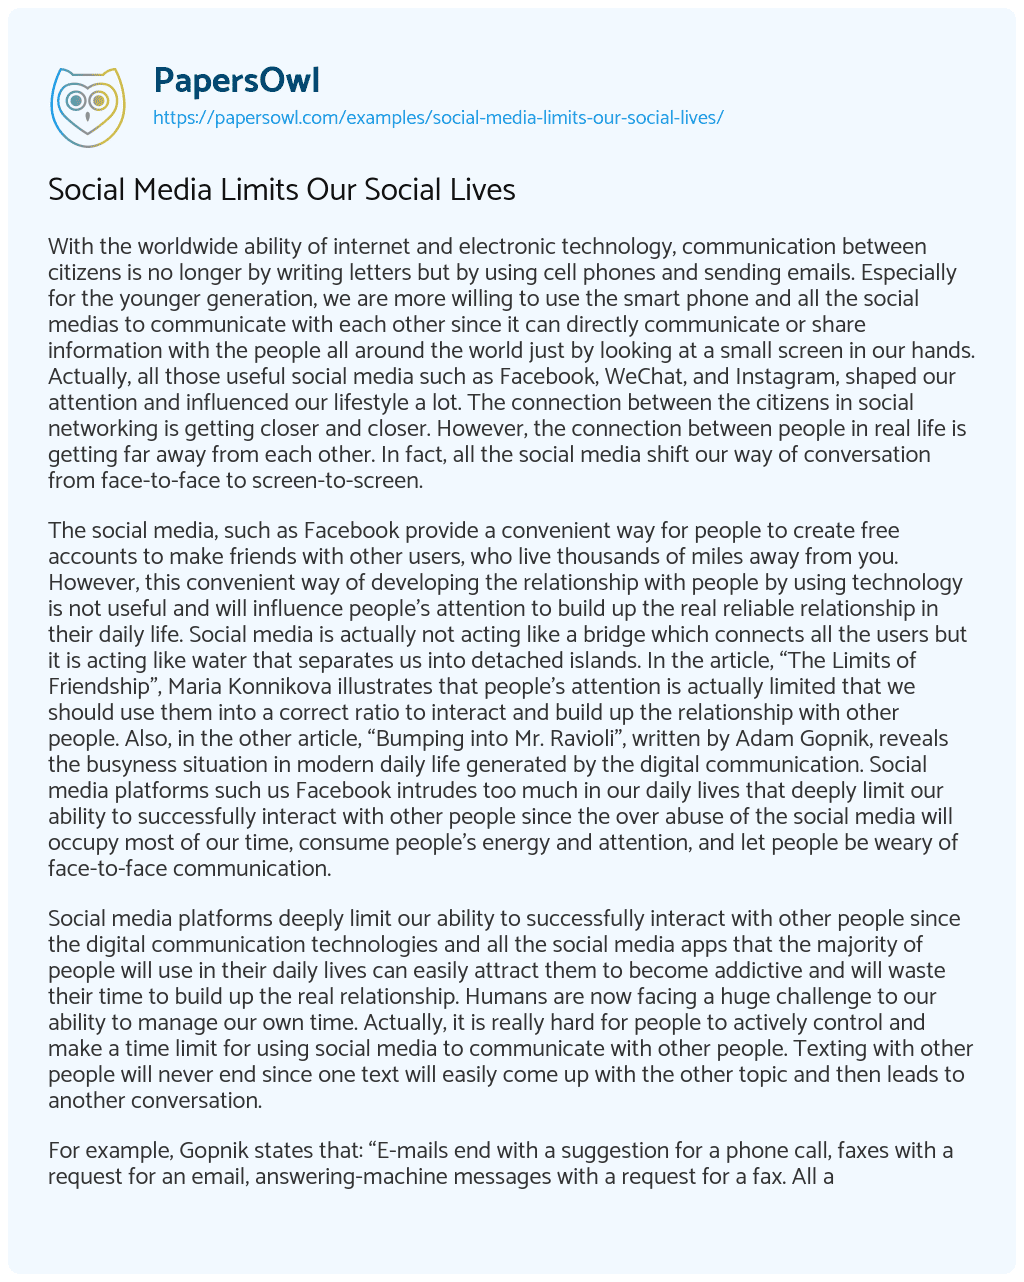 Essay on Social Media Limits our Social Lives